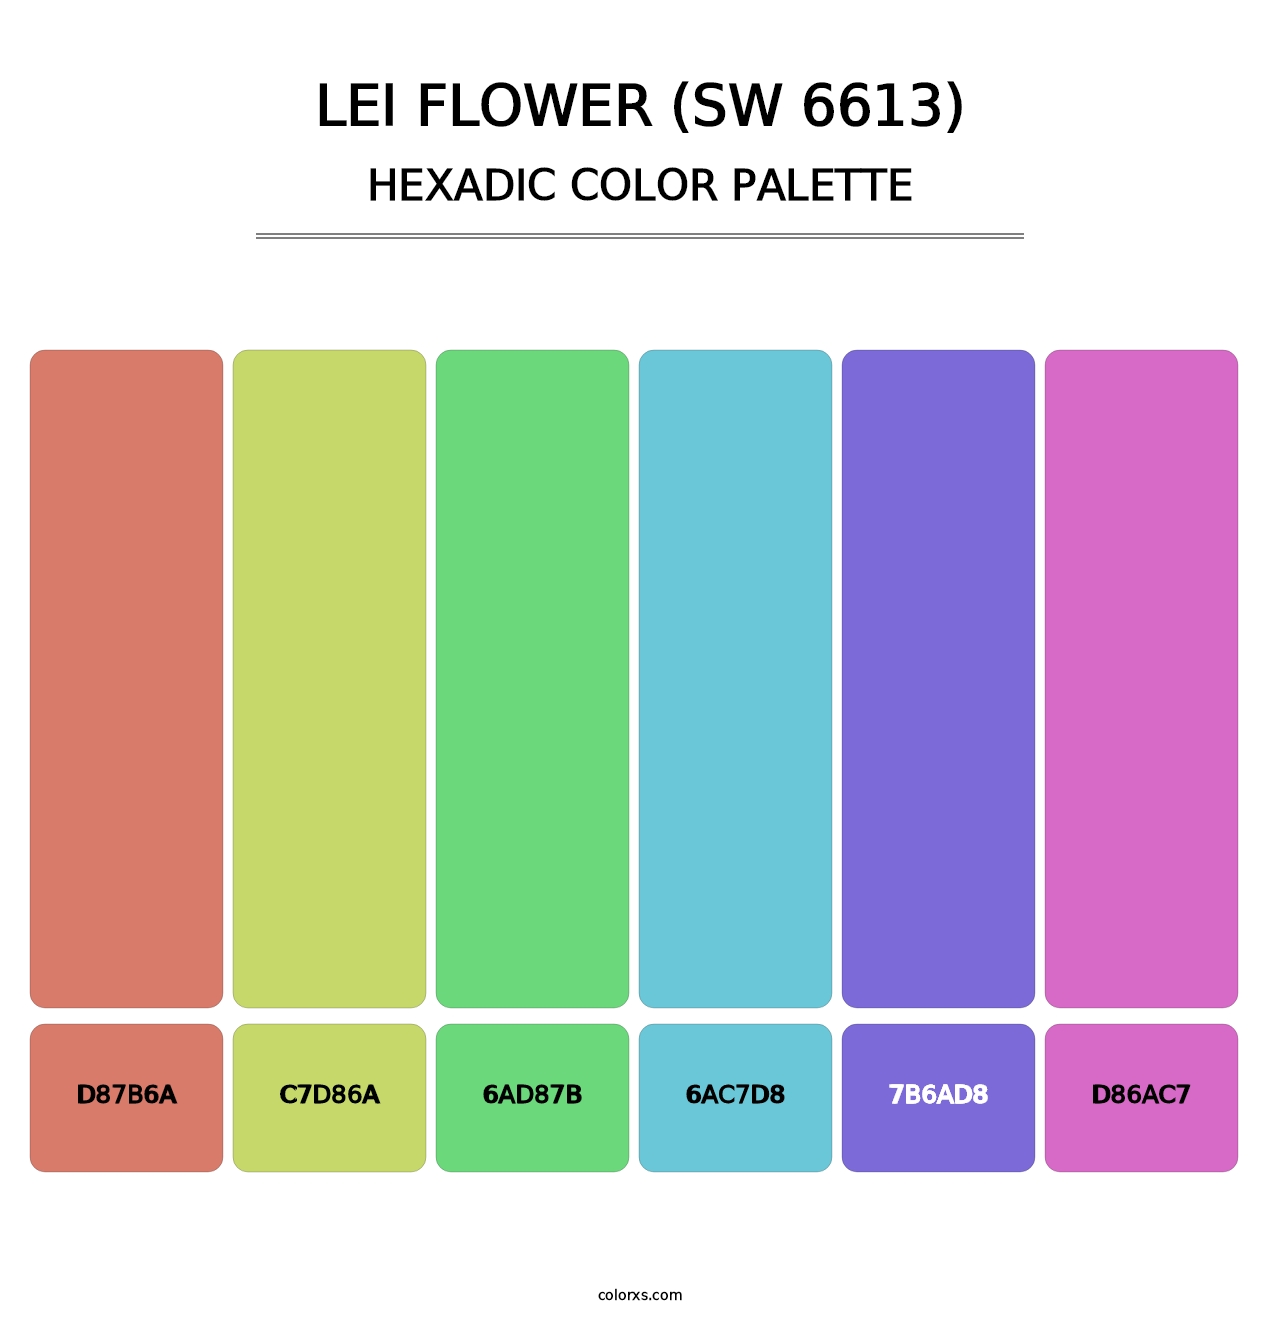 Lei Flower (SW 6613) - Hexadic Color Palette